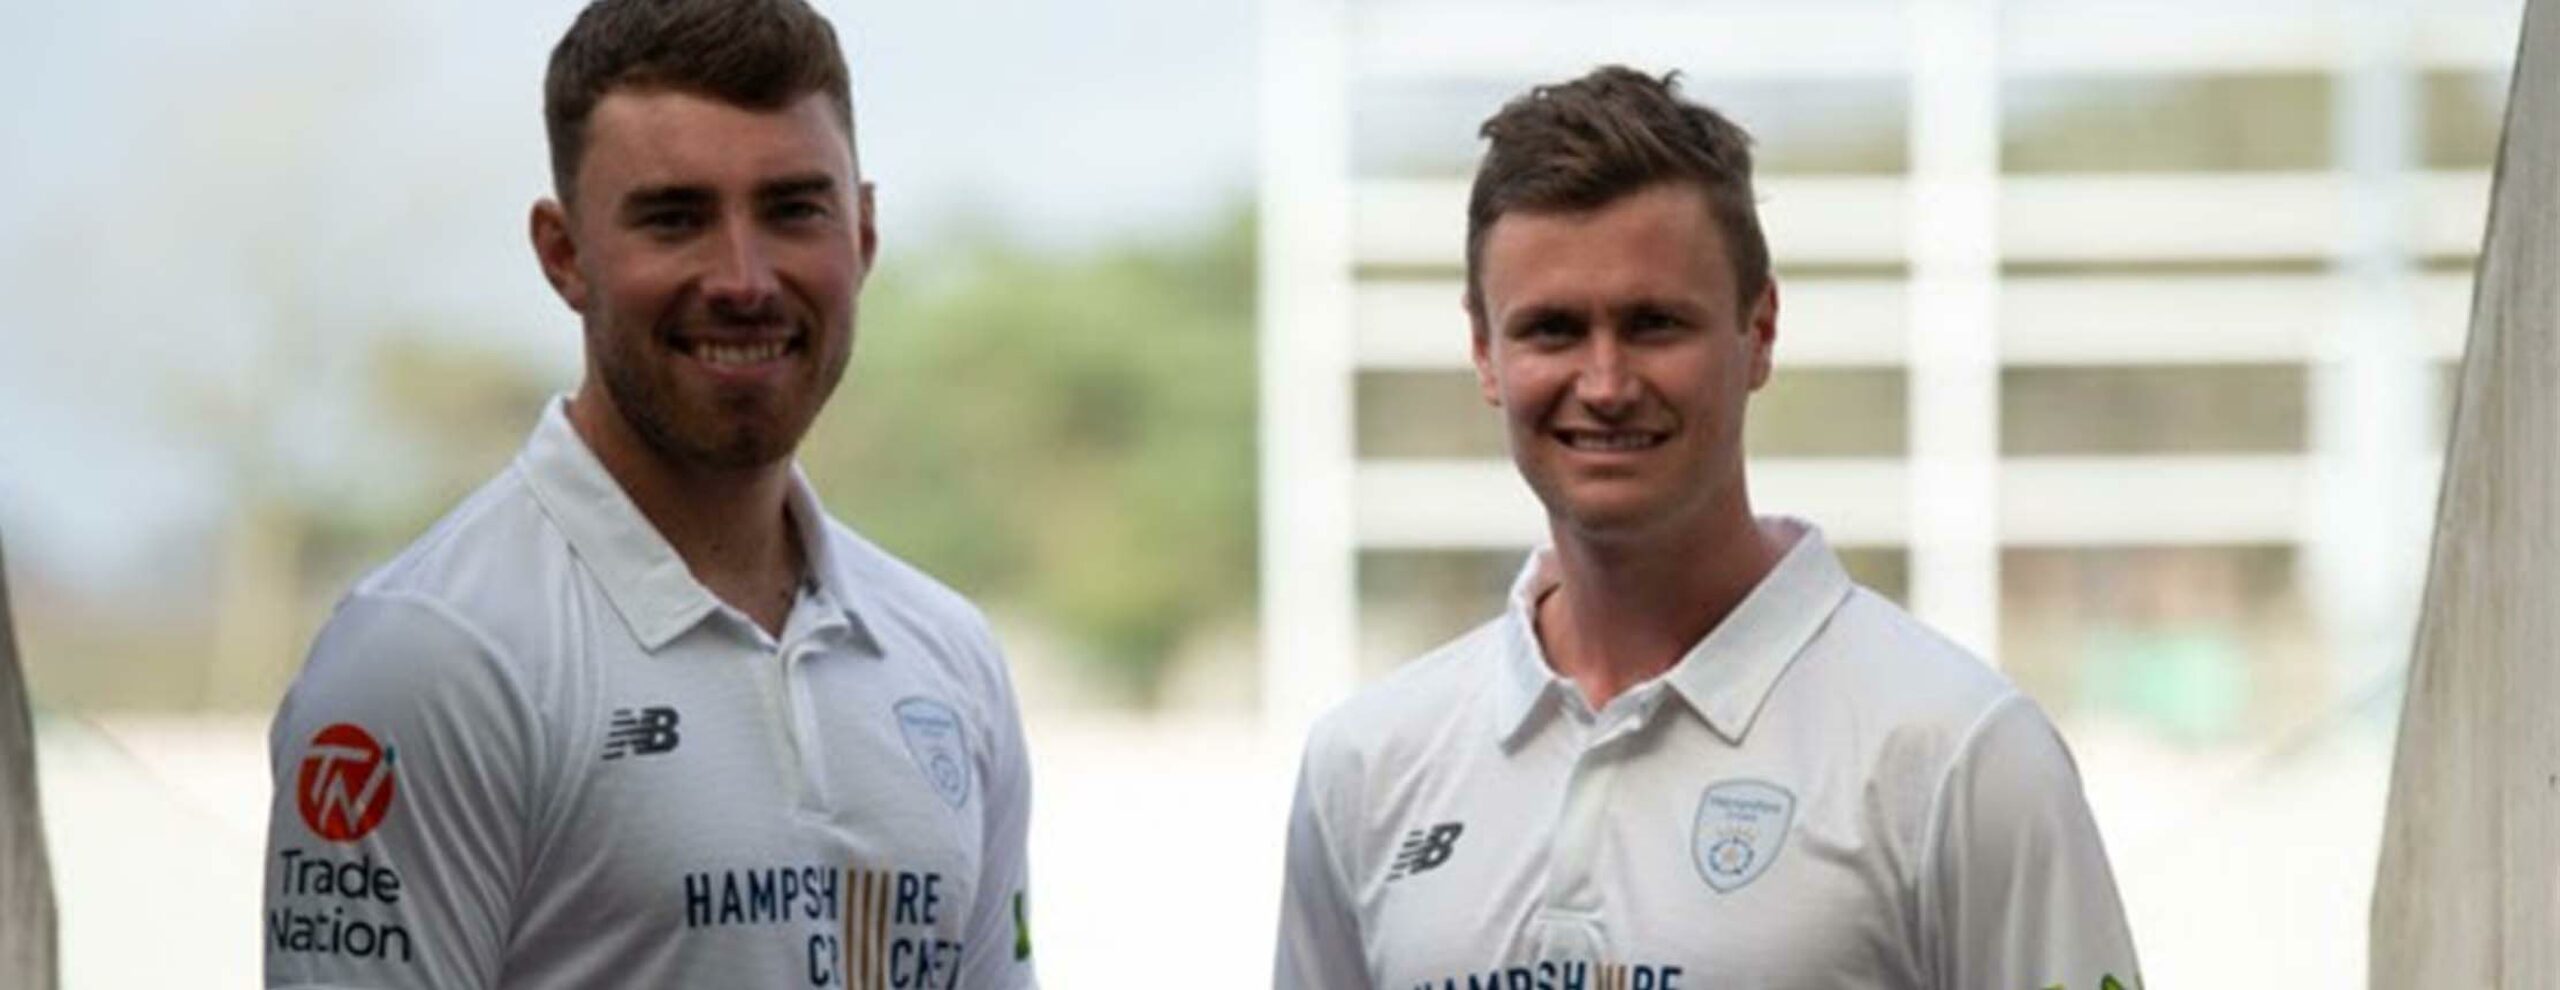 Hampshire Cricket Southern Vipers trade nation partnership